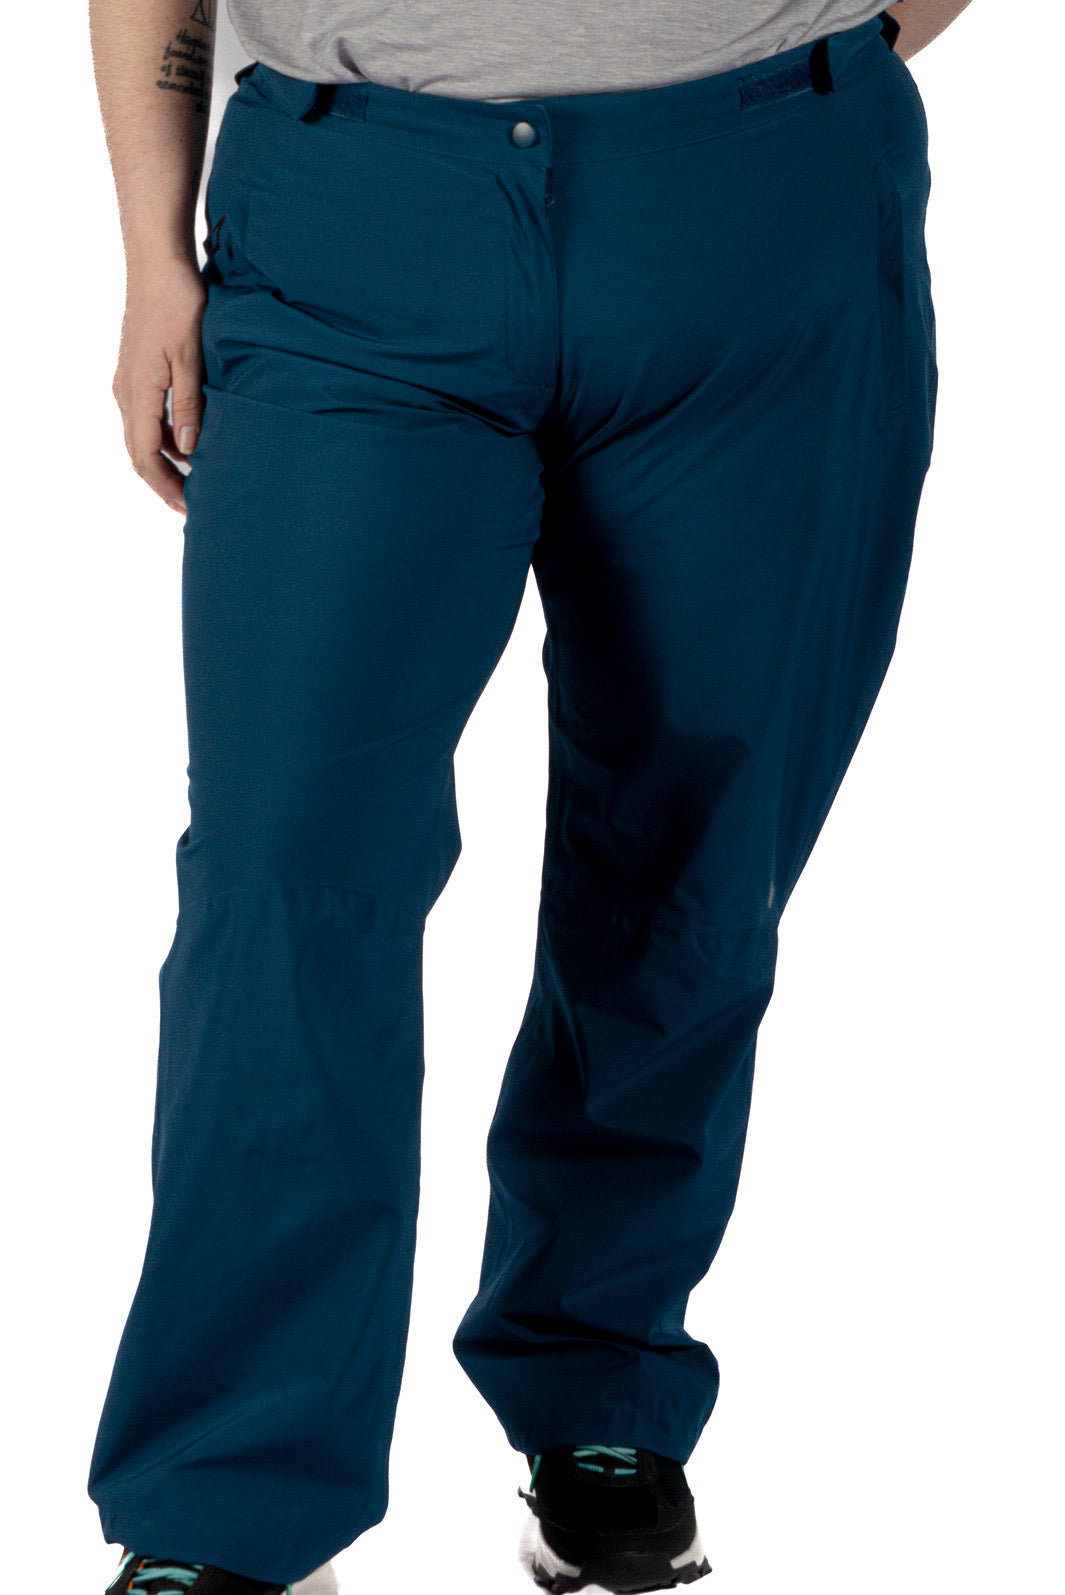 Pantalon Impermeable Respirant Performant Sealed PIII Taille Plus de Sportive Plus